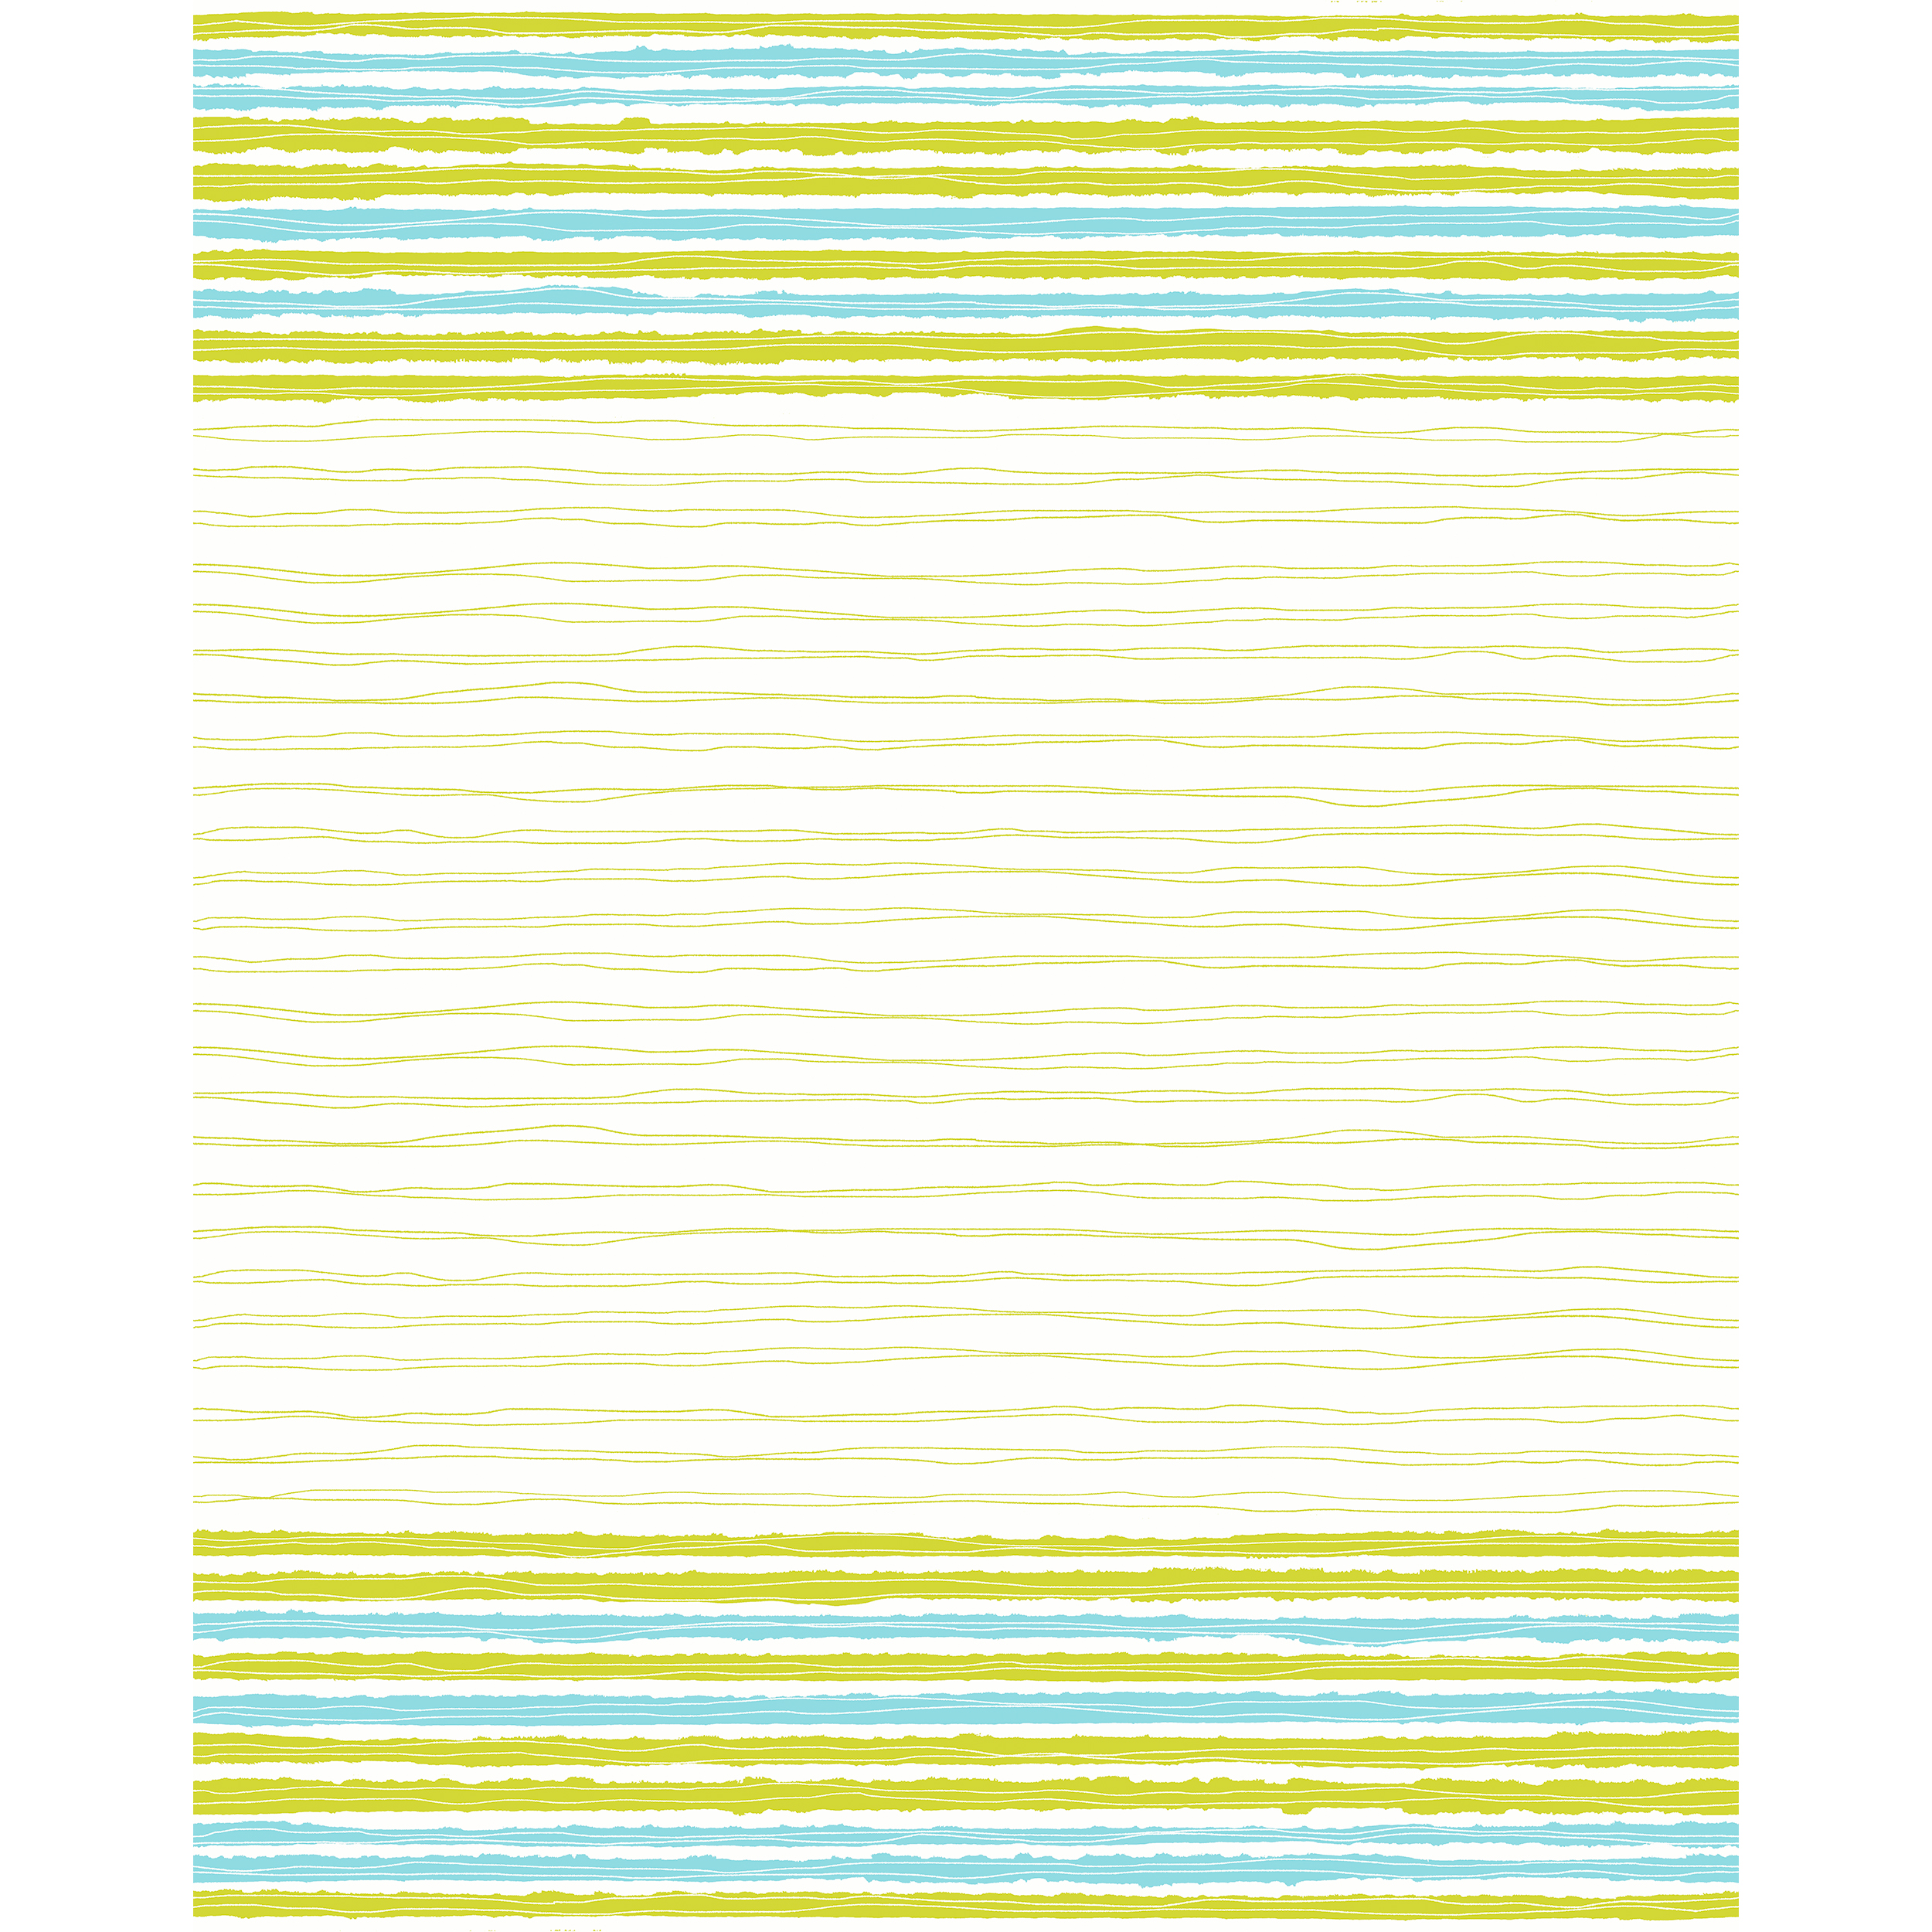 Towel Napkin flat-pack, 38 x 54 cm, Elise Stripes